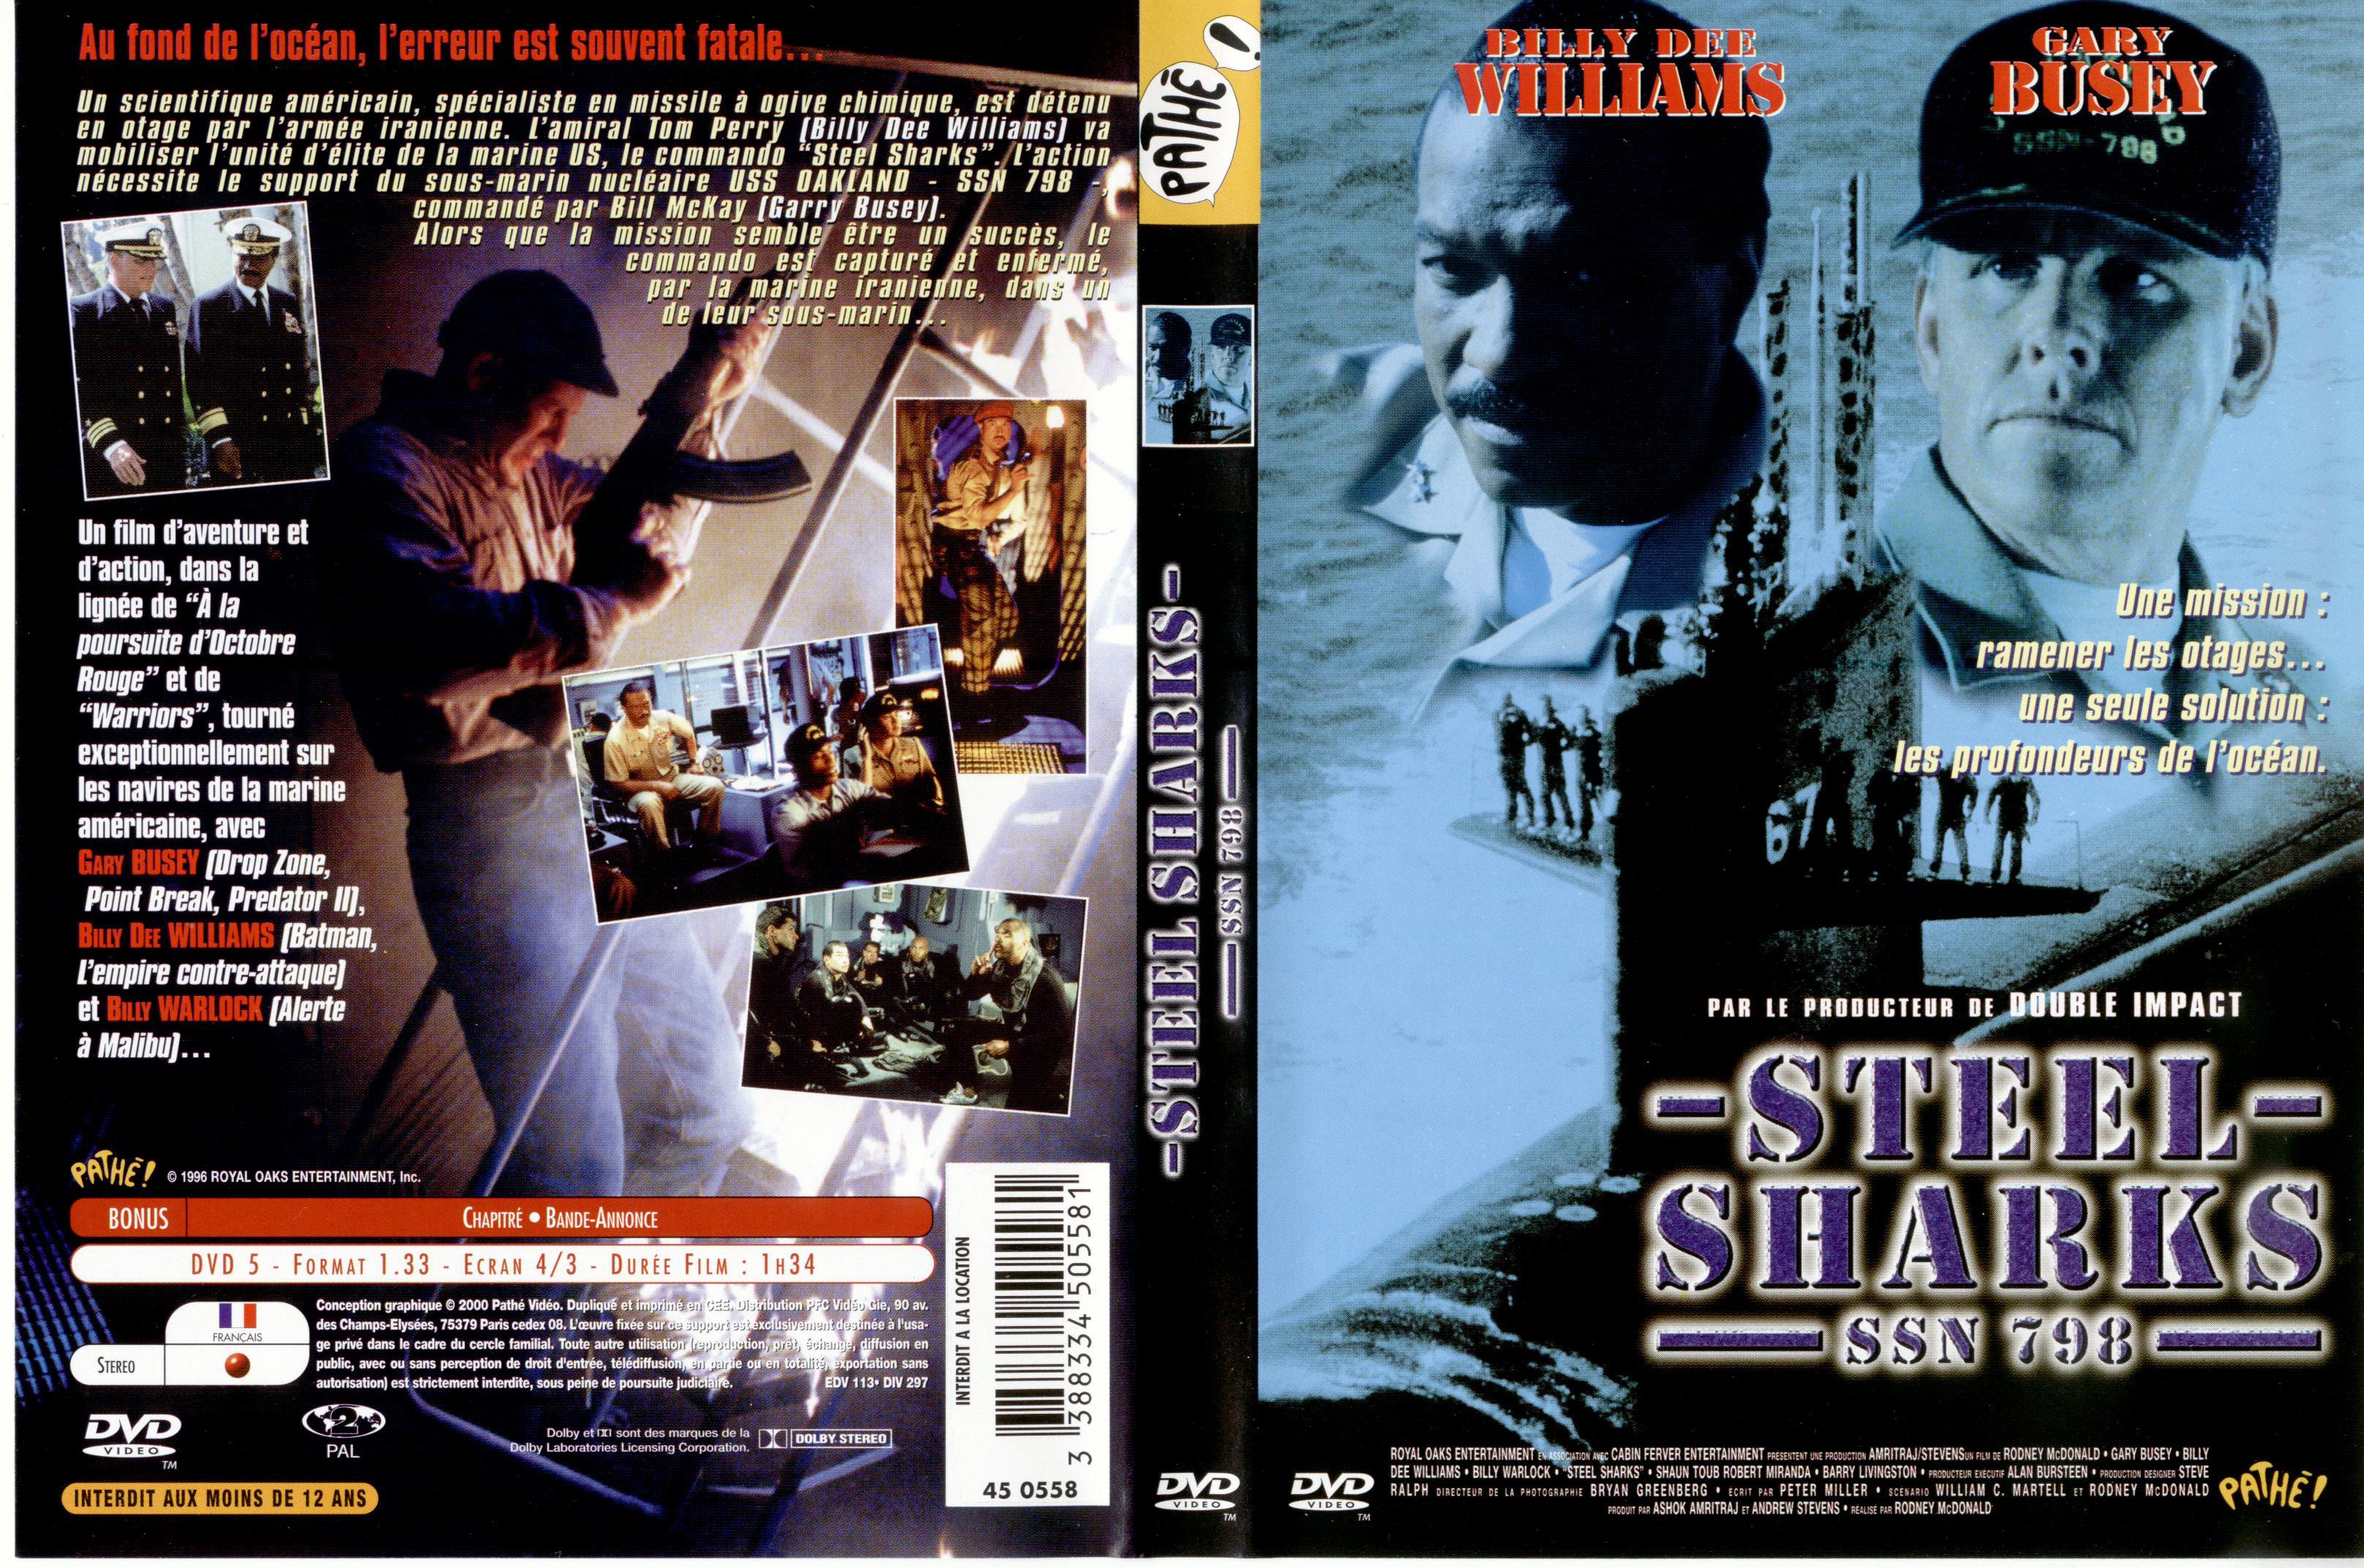 Jaquette DVD Steel sharks